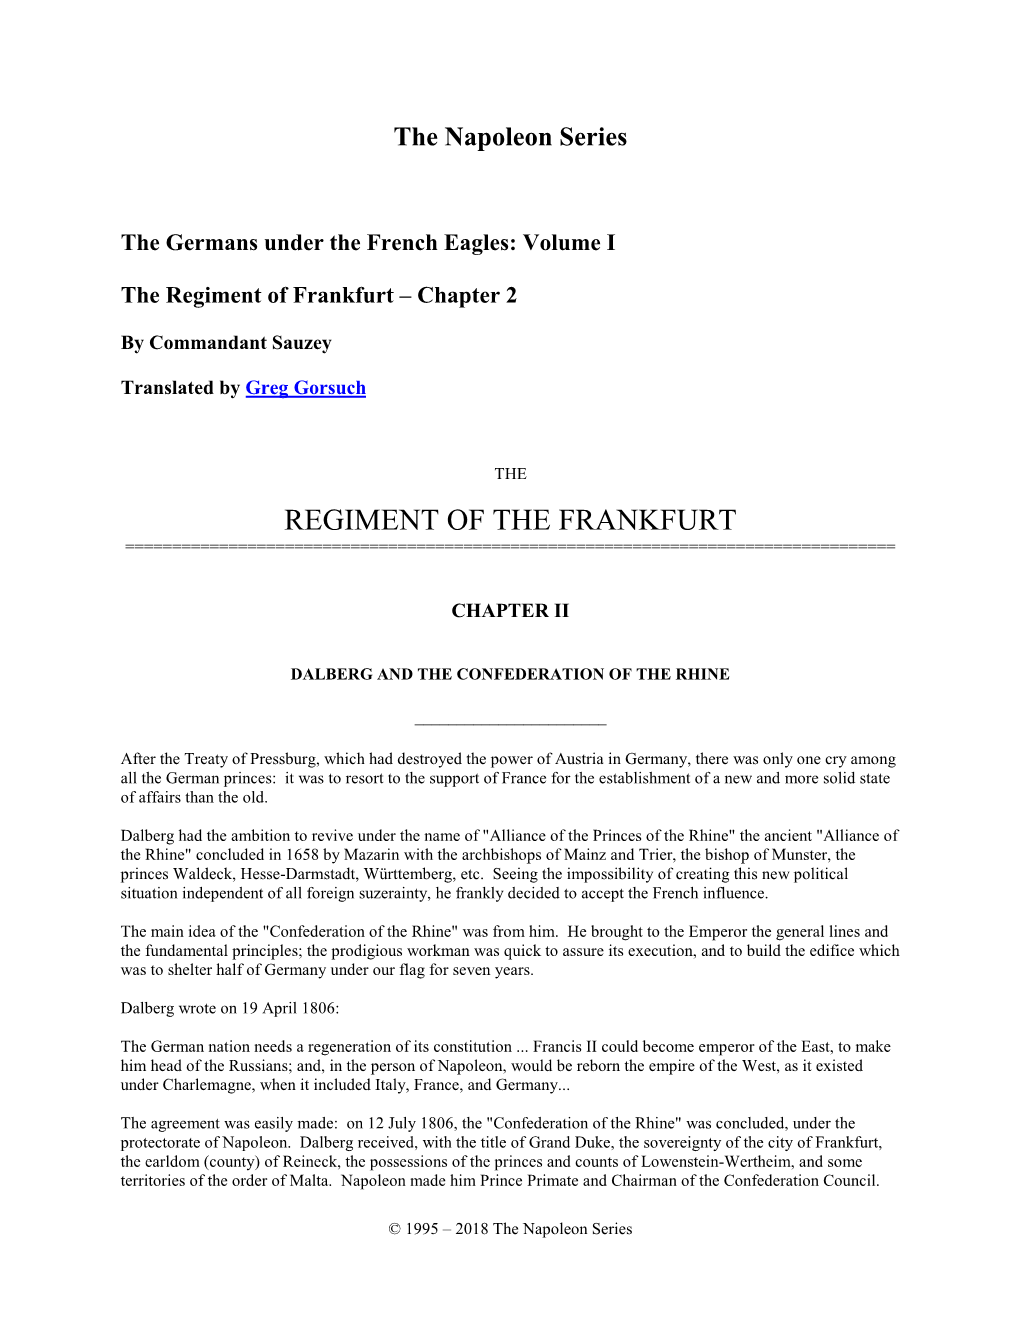 Regiment of the Frankfurt ======